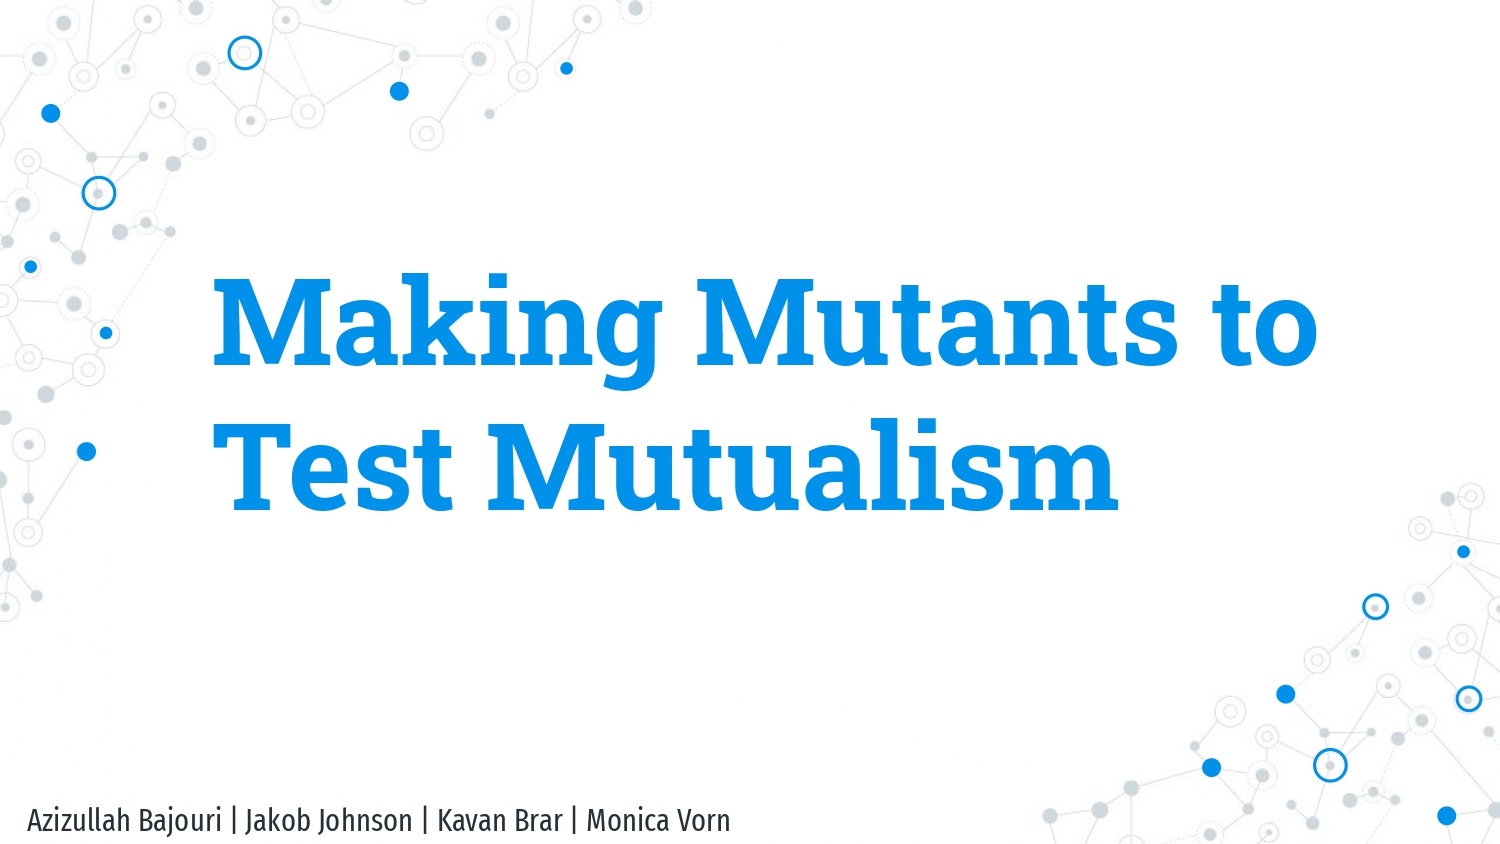 Making Mutants to Test Mutualism poster